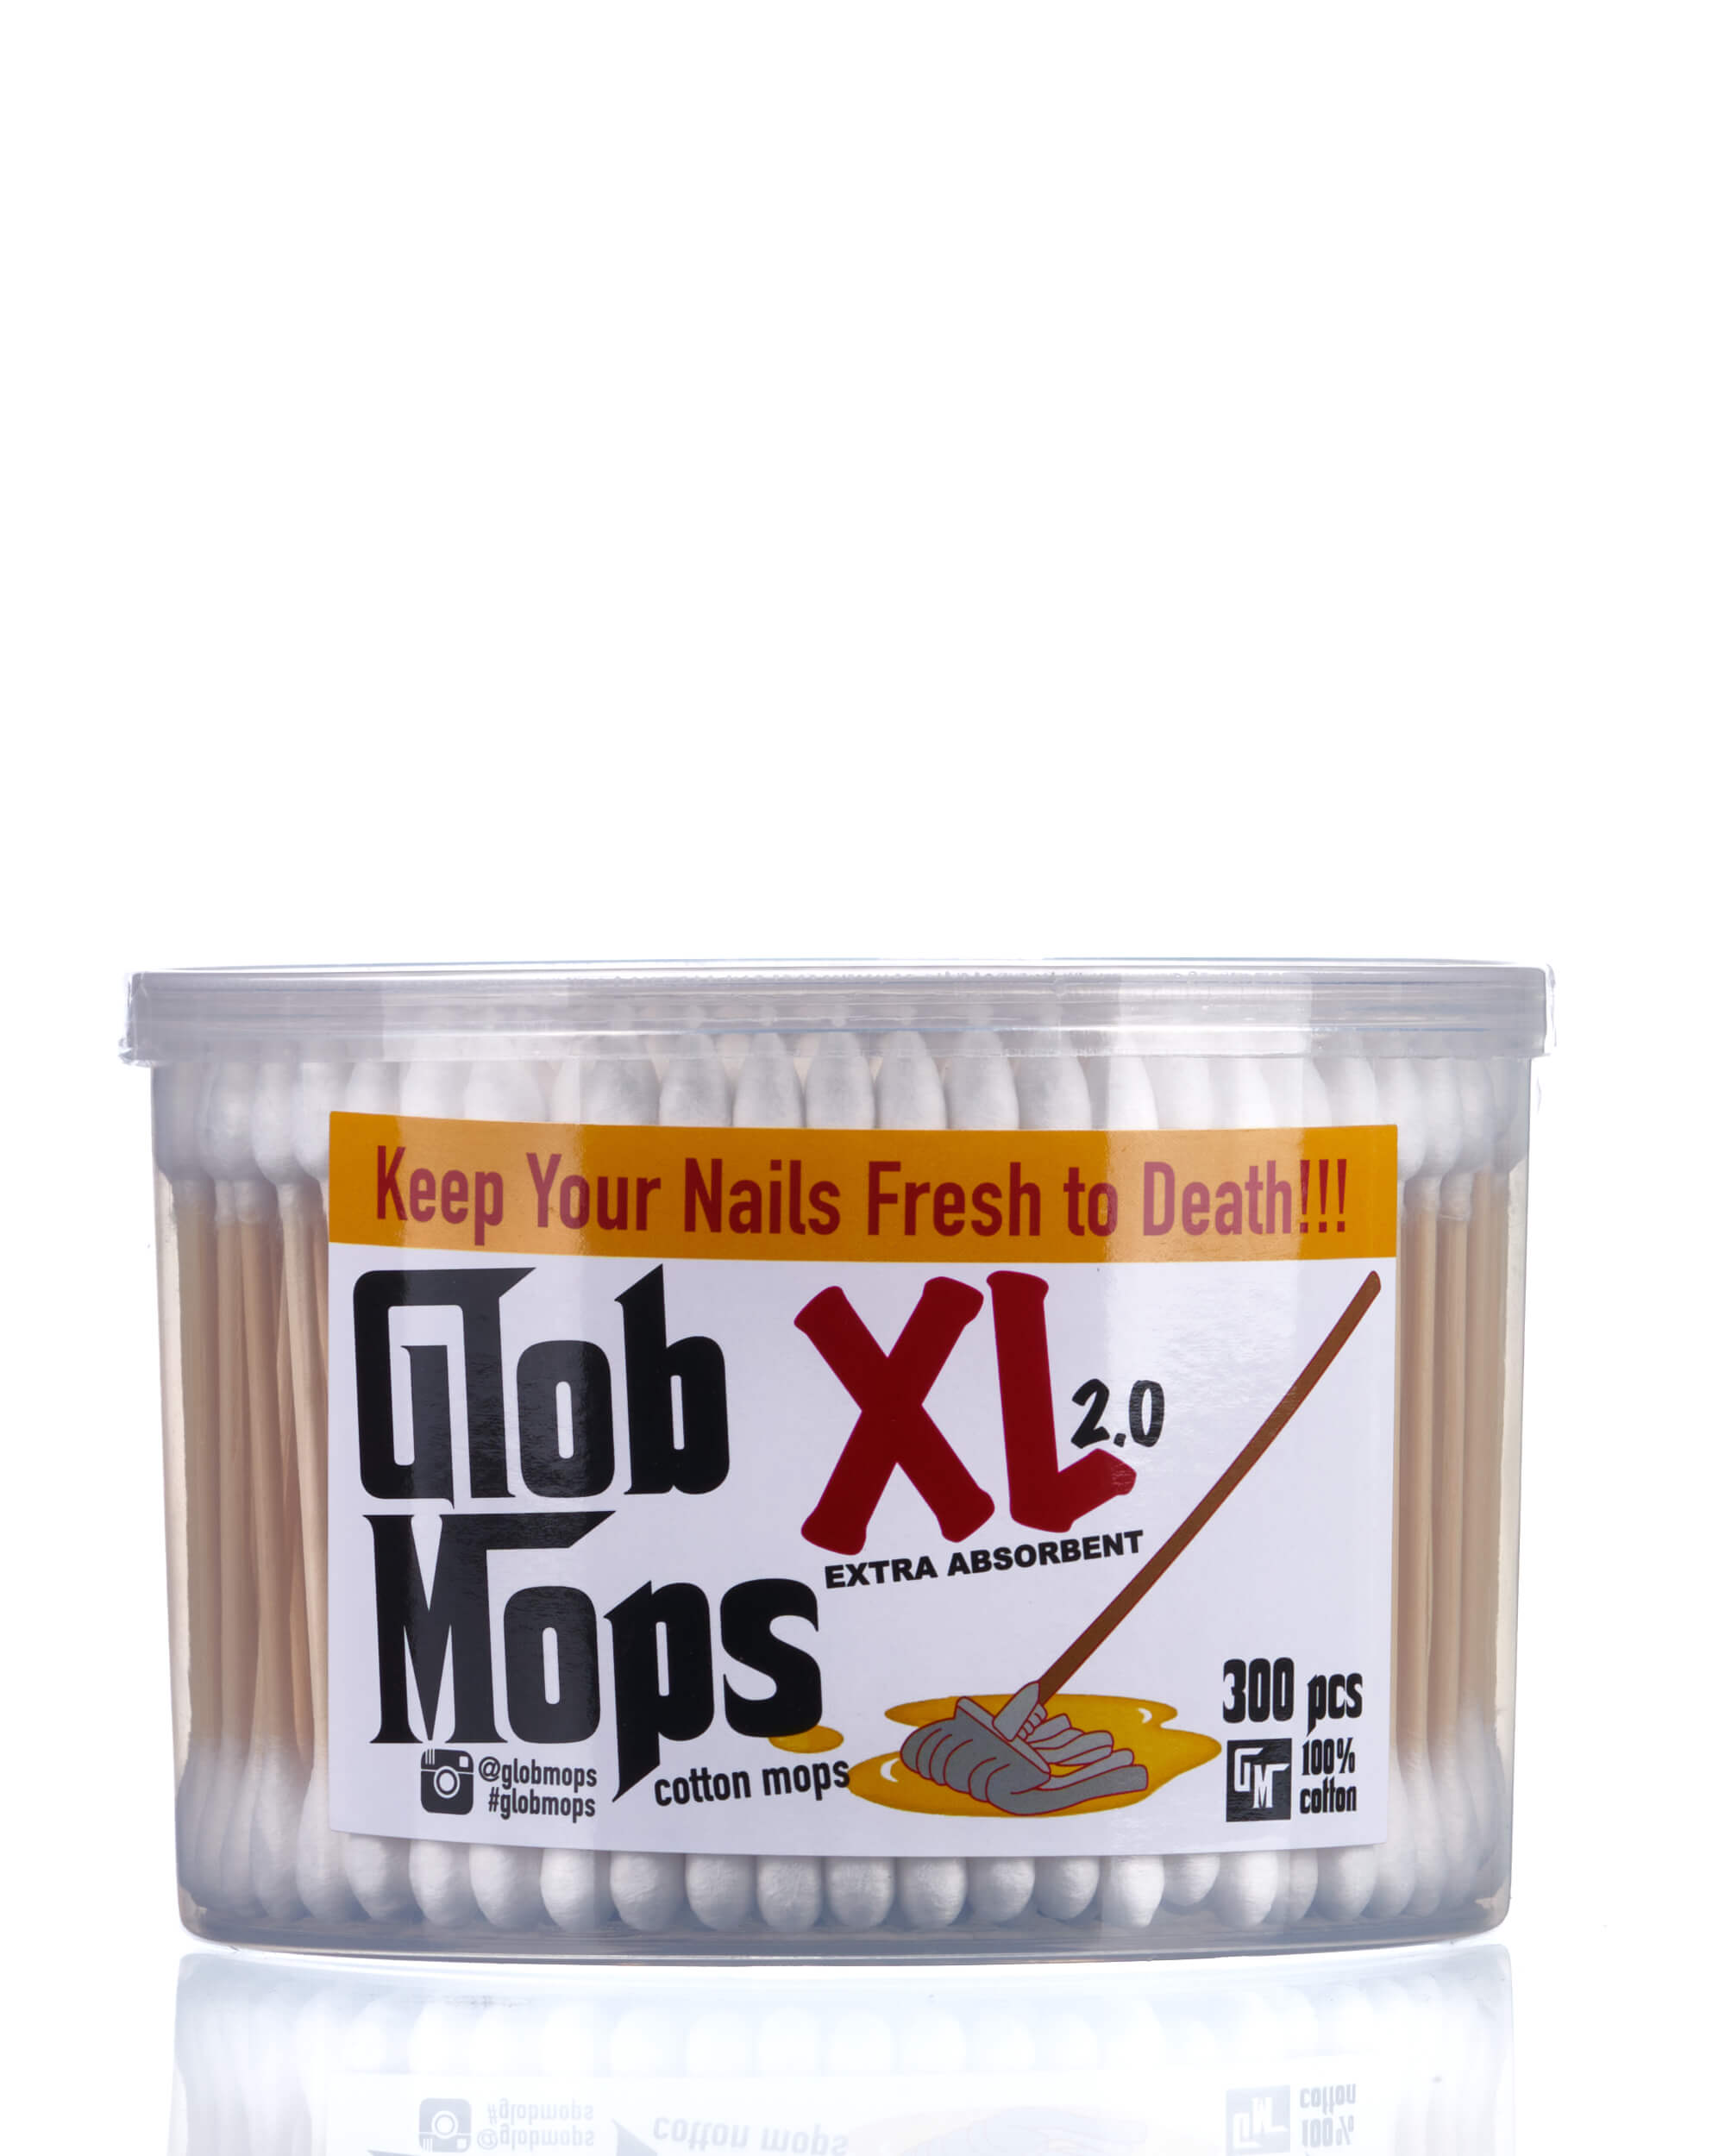 Glob Mops XL Glob Mops